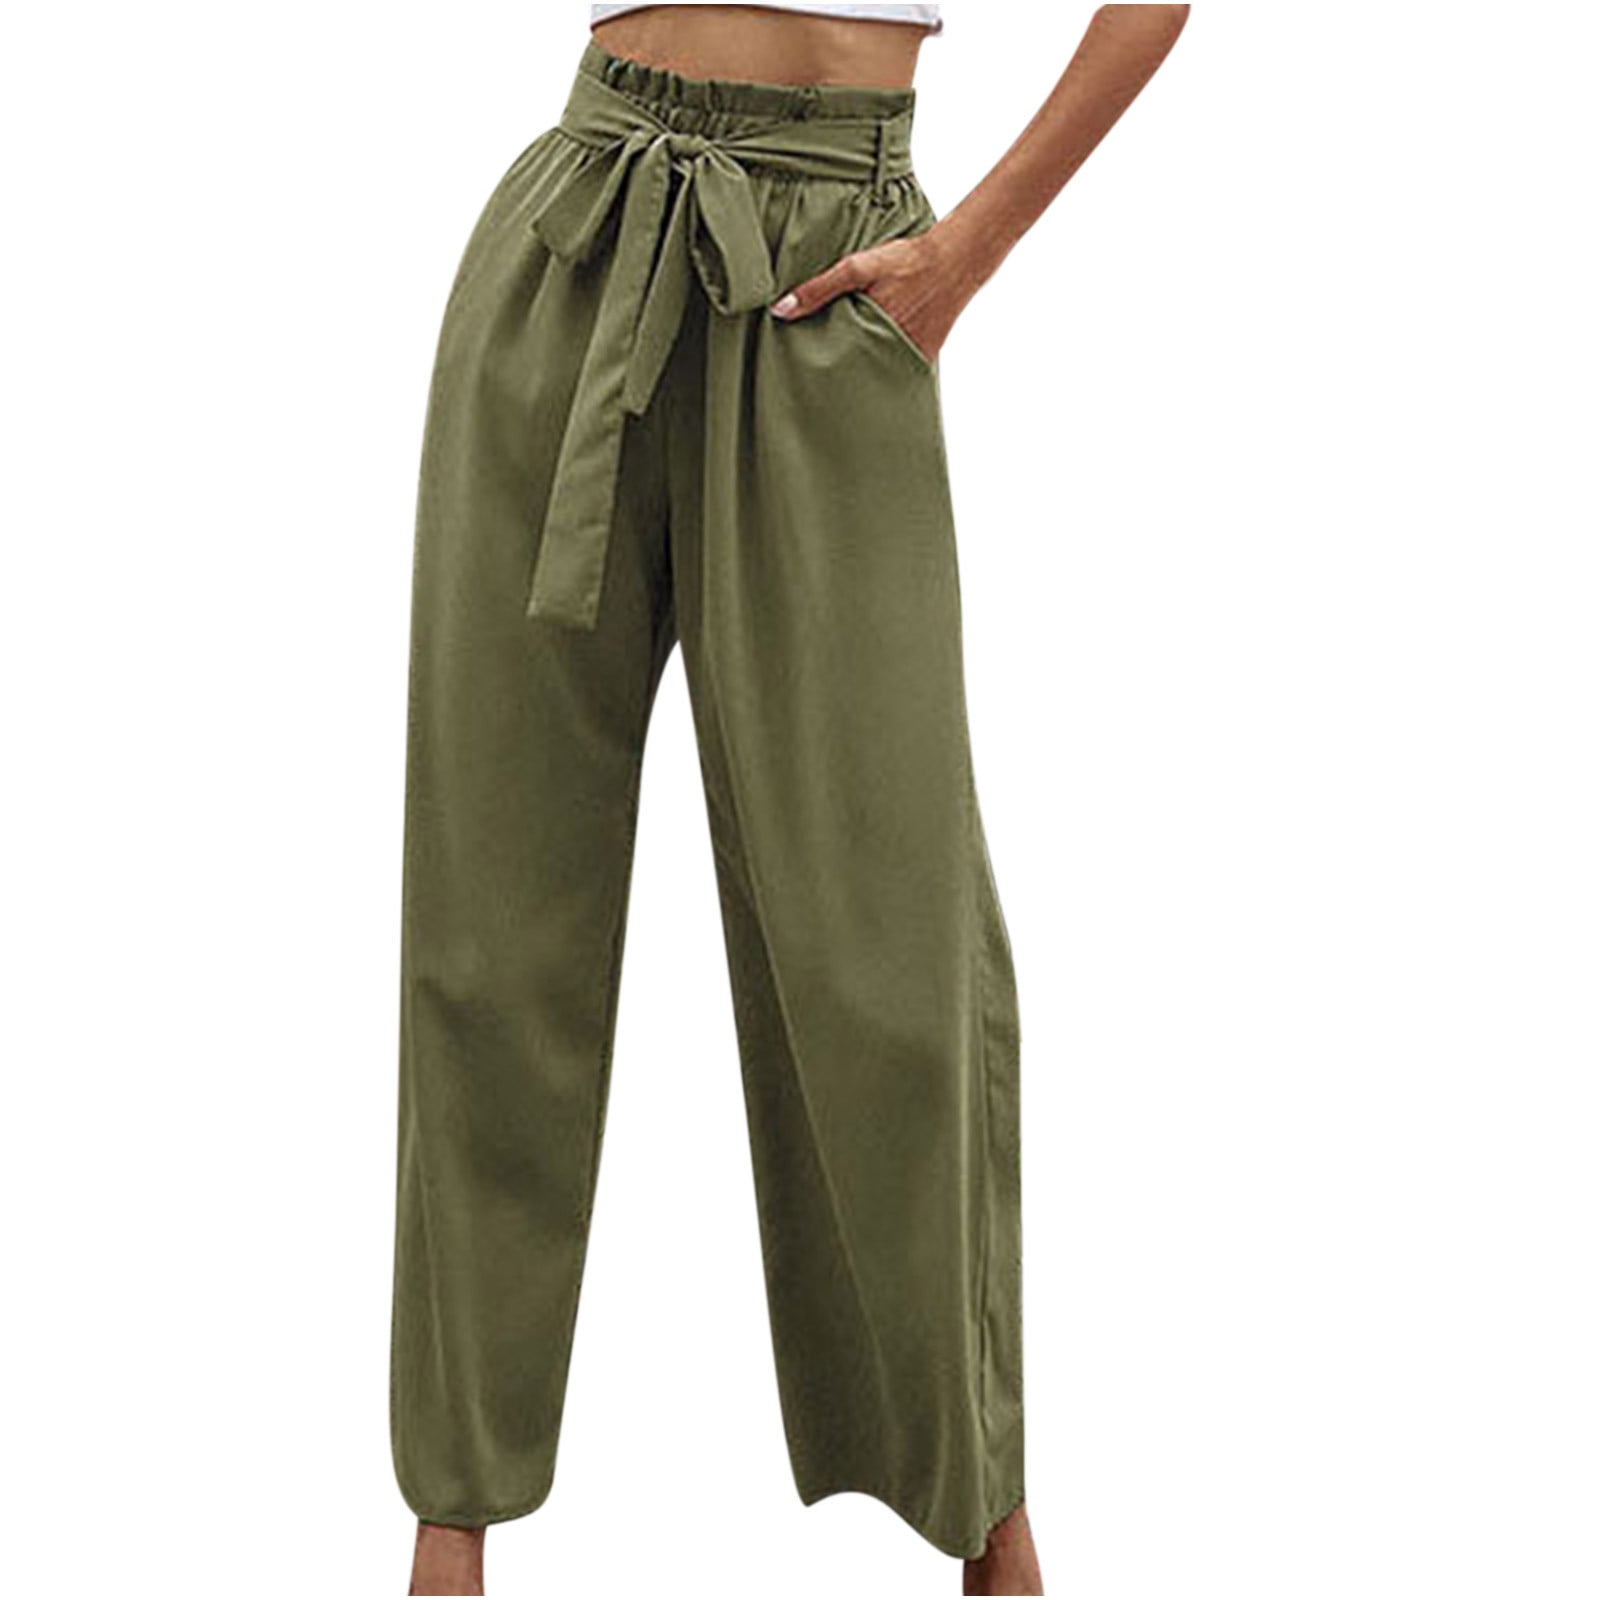 Zodggu Womens Solid Color High-Waist Full Length Long Pants